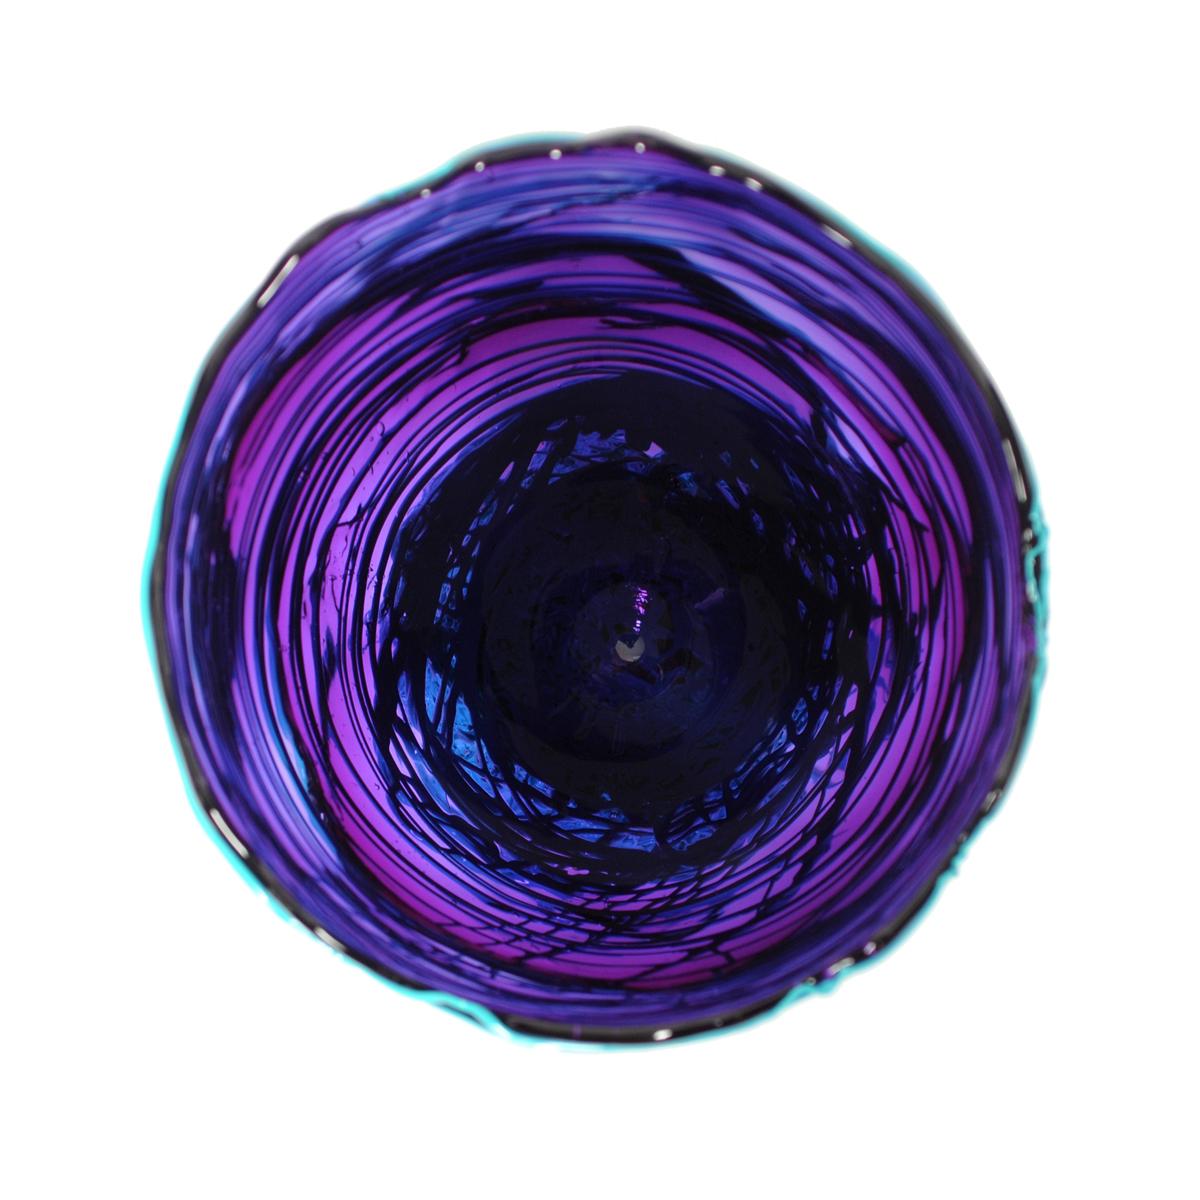 Italian Contemporary Gaetano Pesce Spaghetti M Vase Soft Resin Purple, Turquoise For Sale